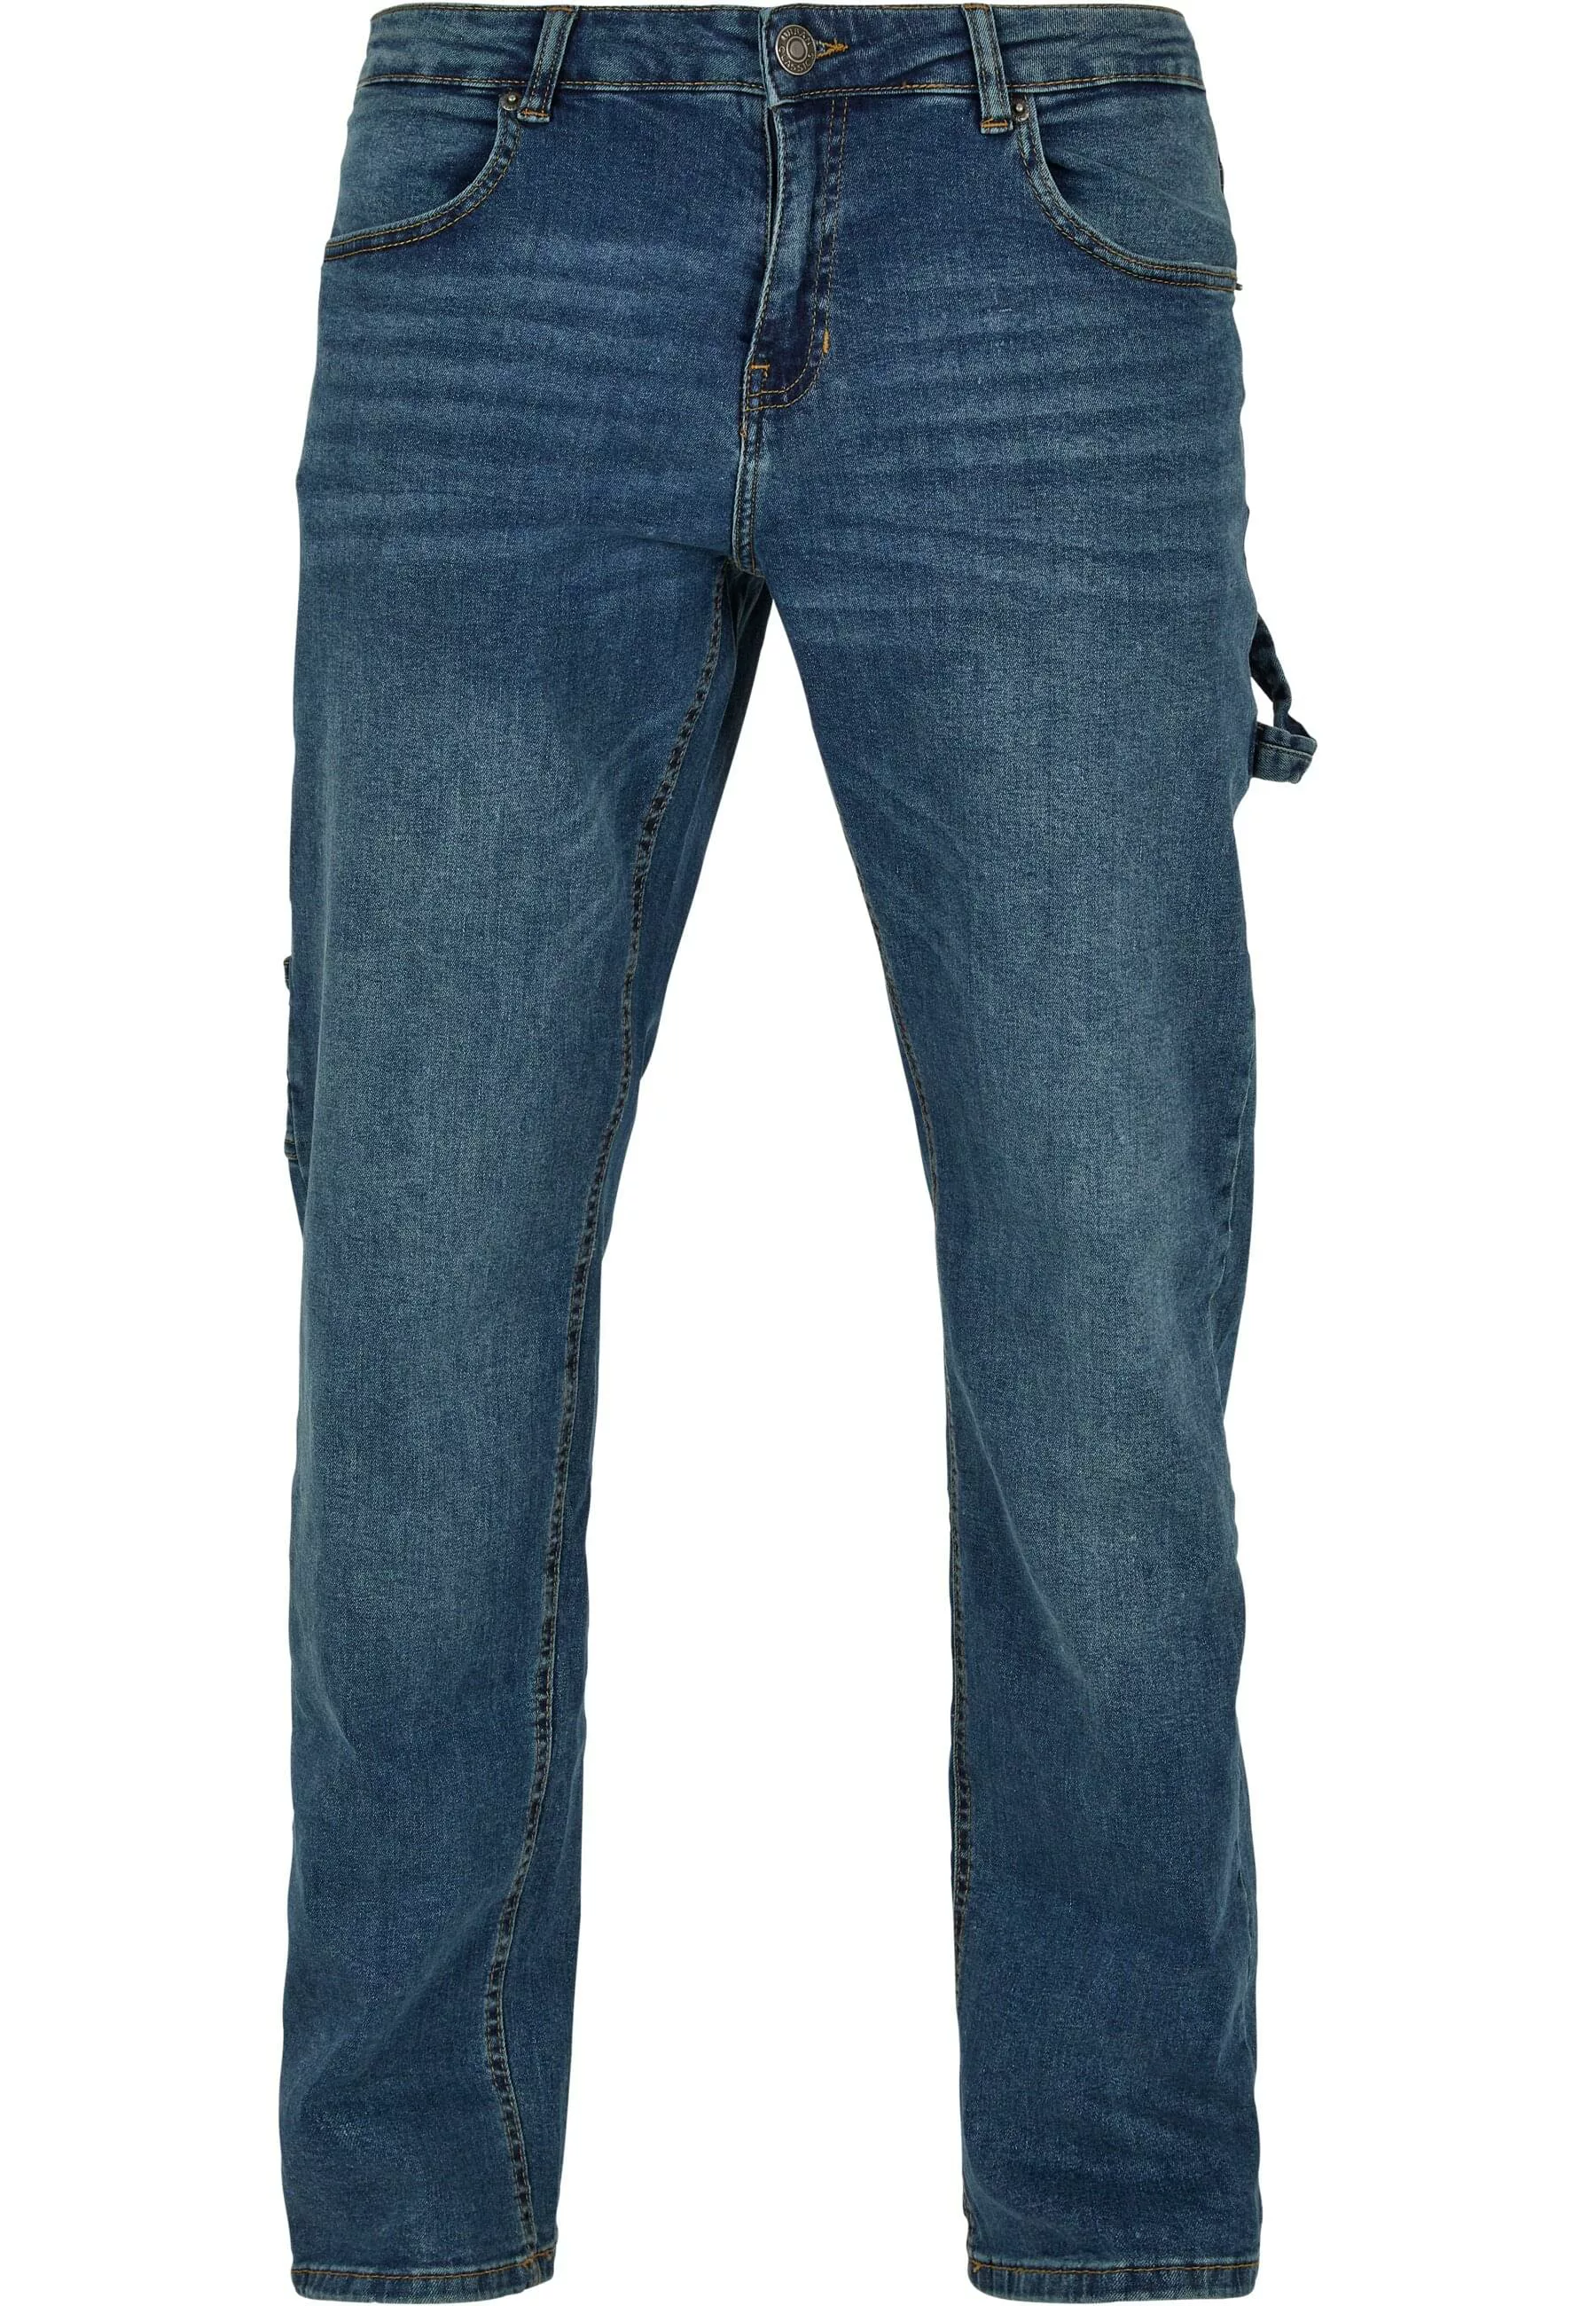 URBAN CLASSICS Bequeme Jeans "Urban Classics Herren Carpenter Back Jeans", günstig online kaufen